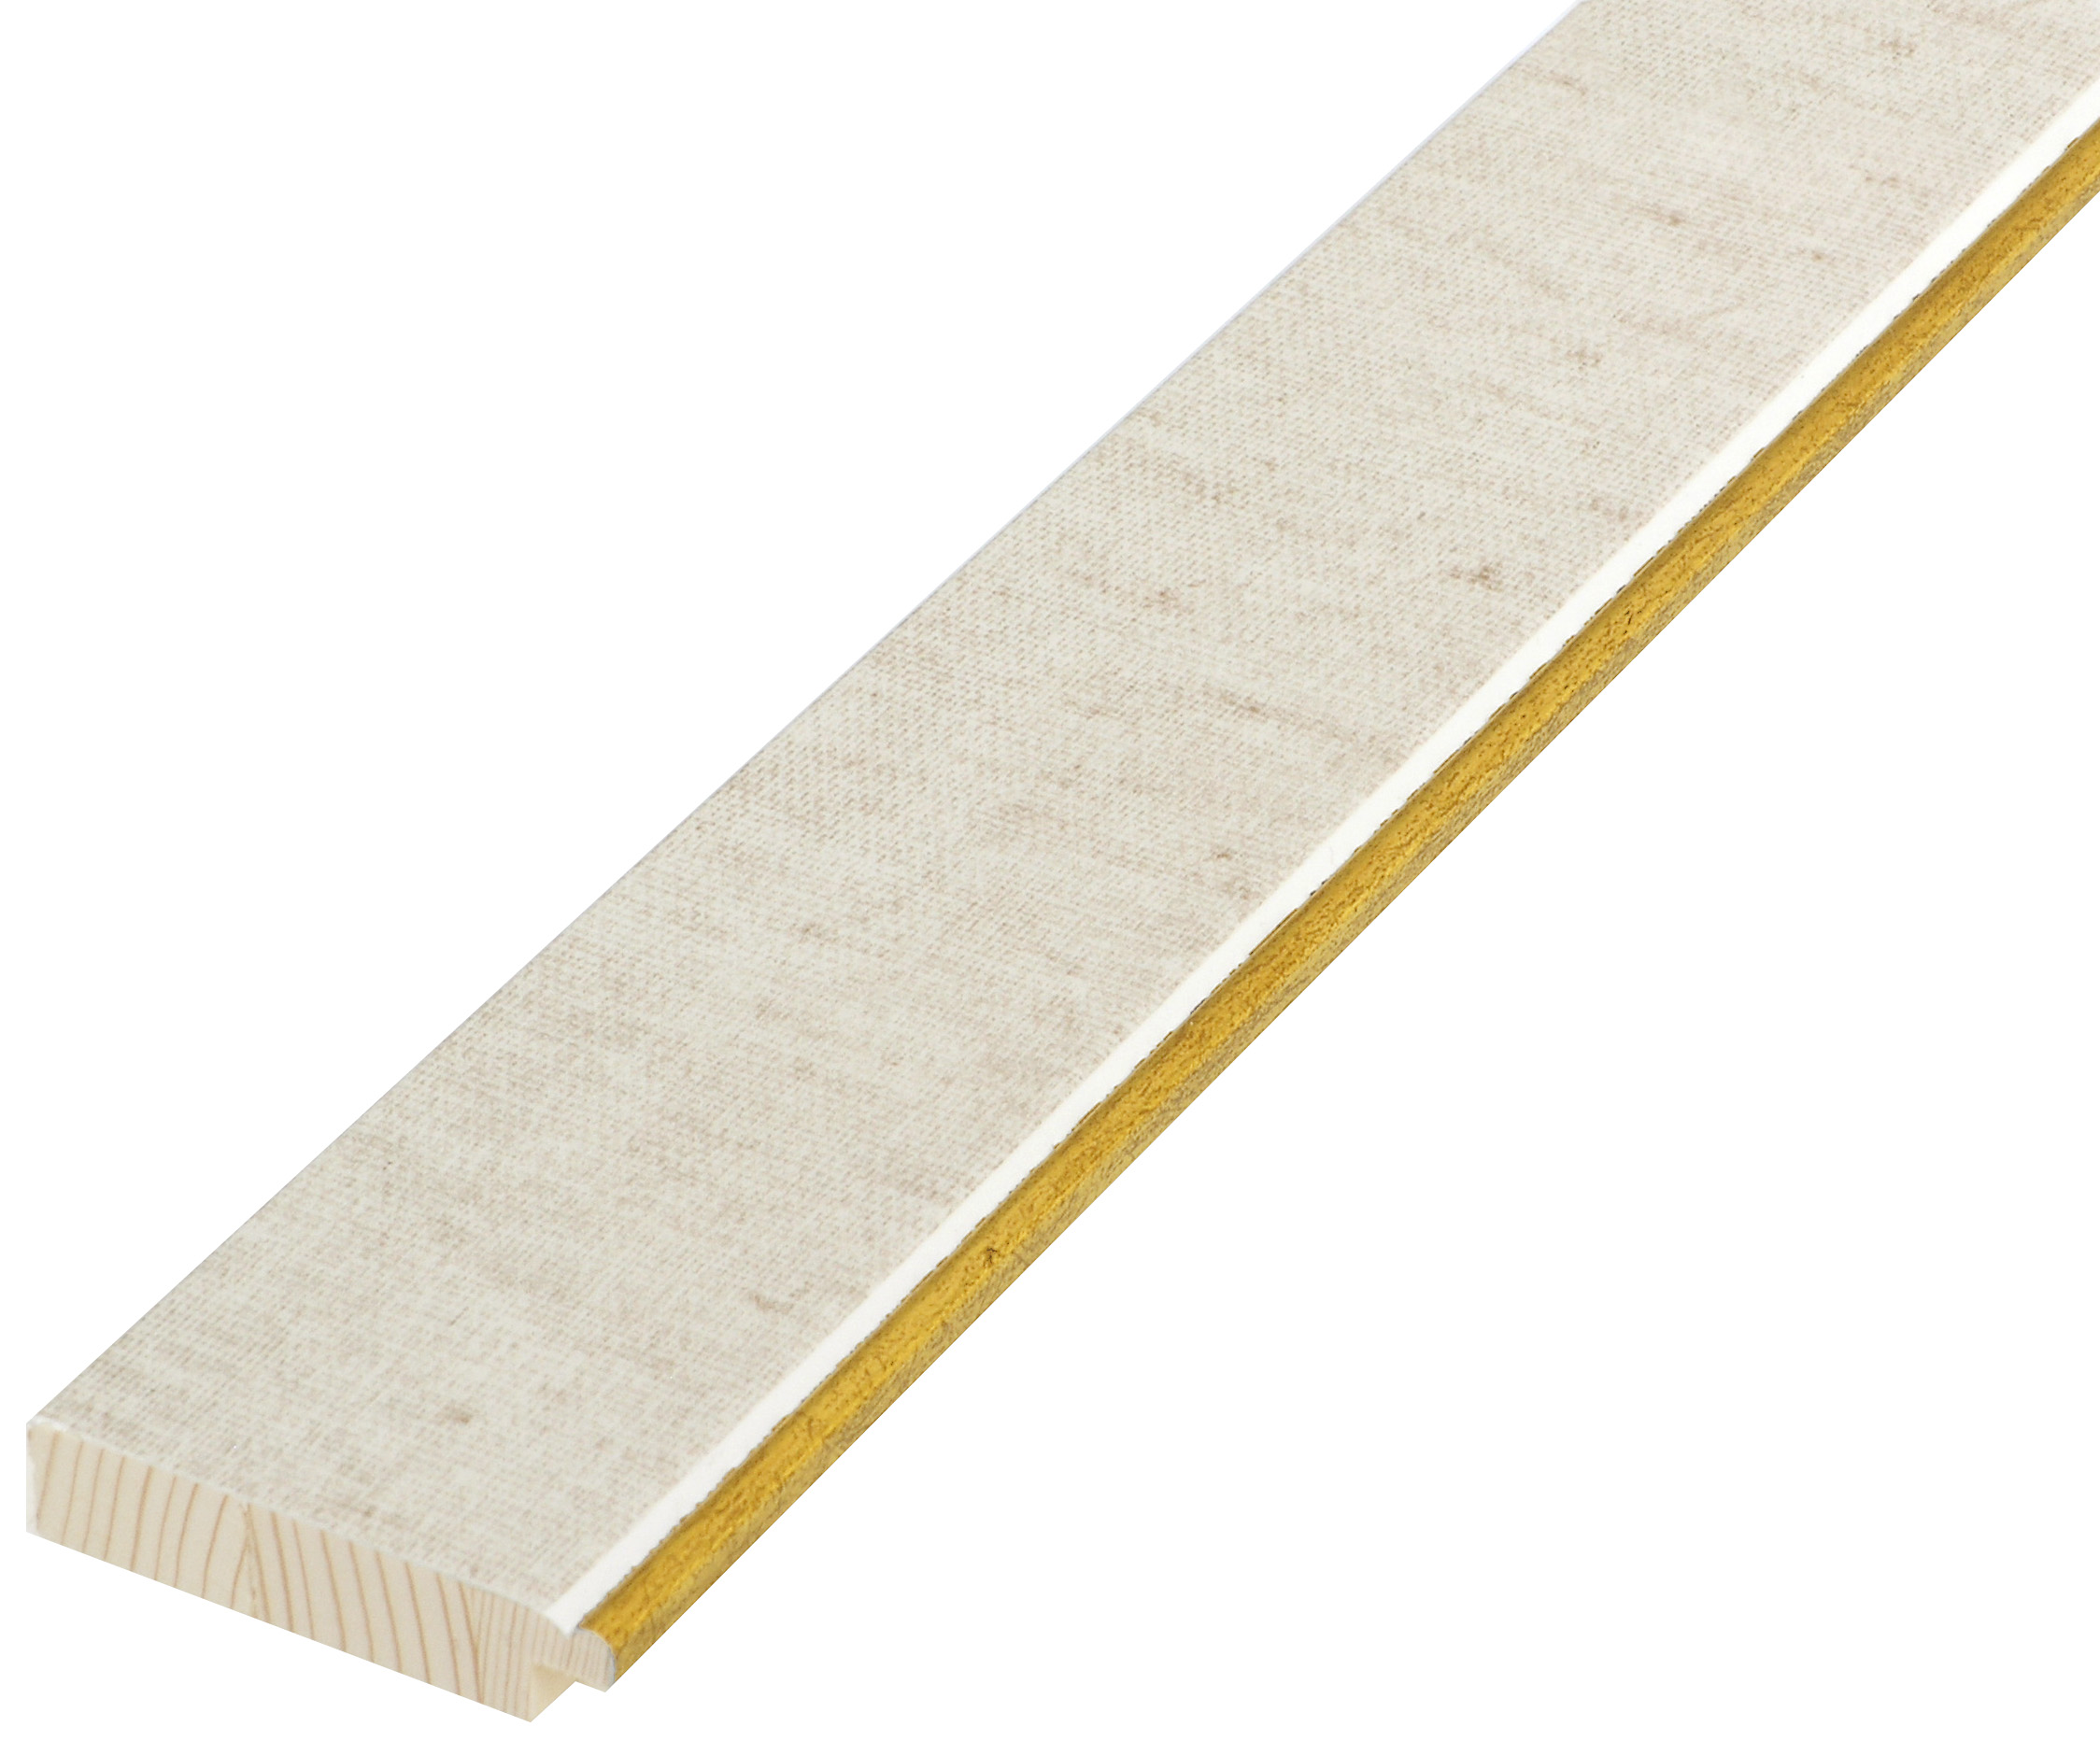 Liner lamellar pine 45mm - flat, fabric effect, gold edge